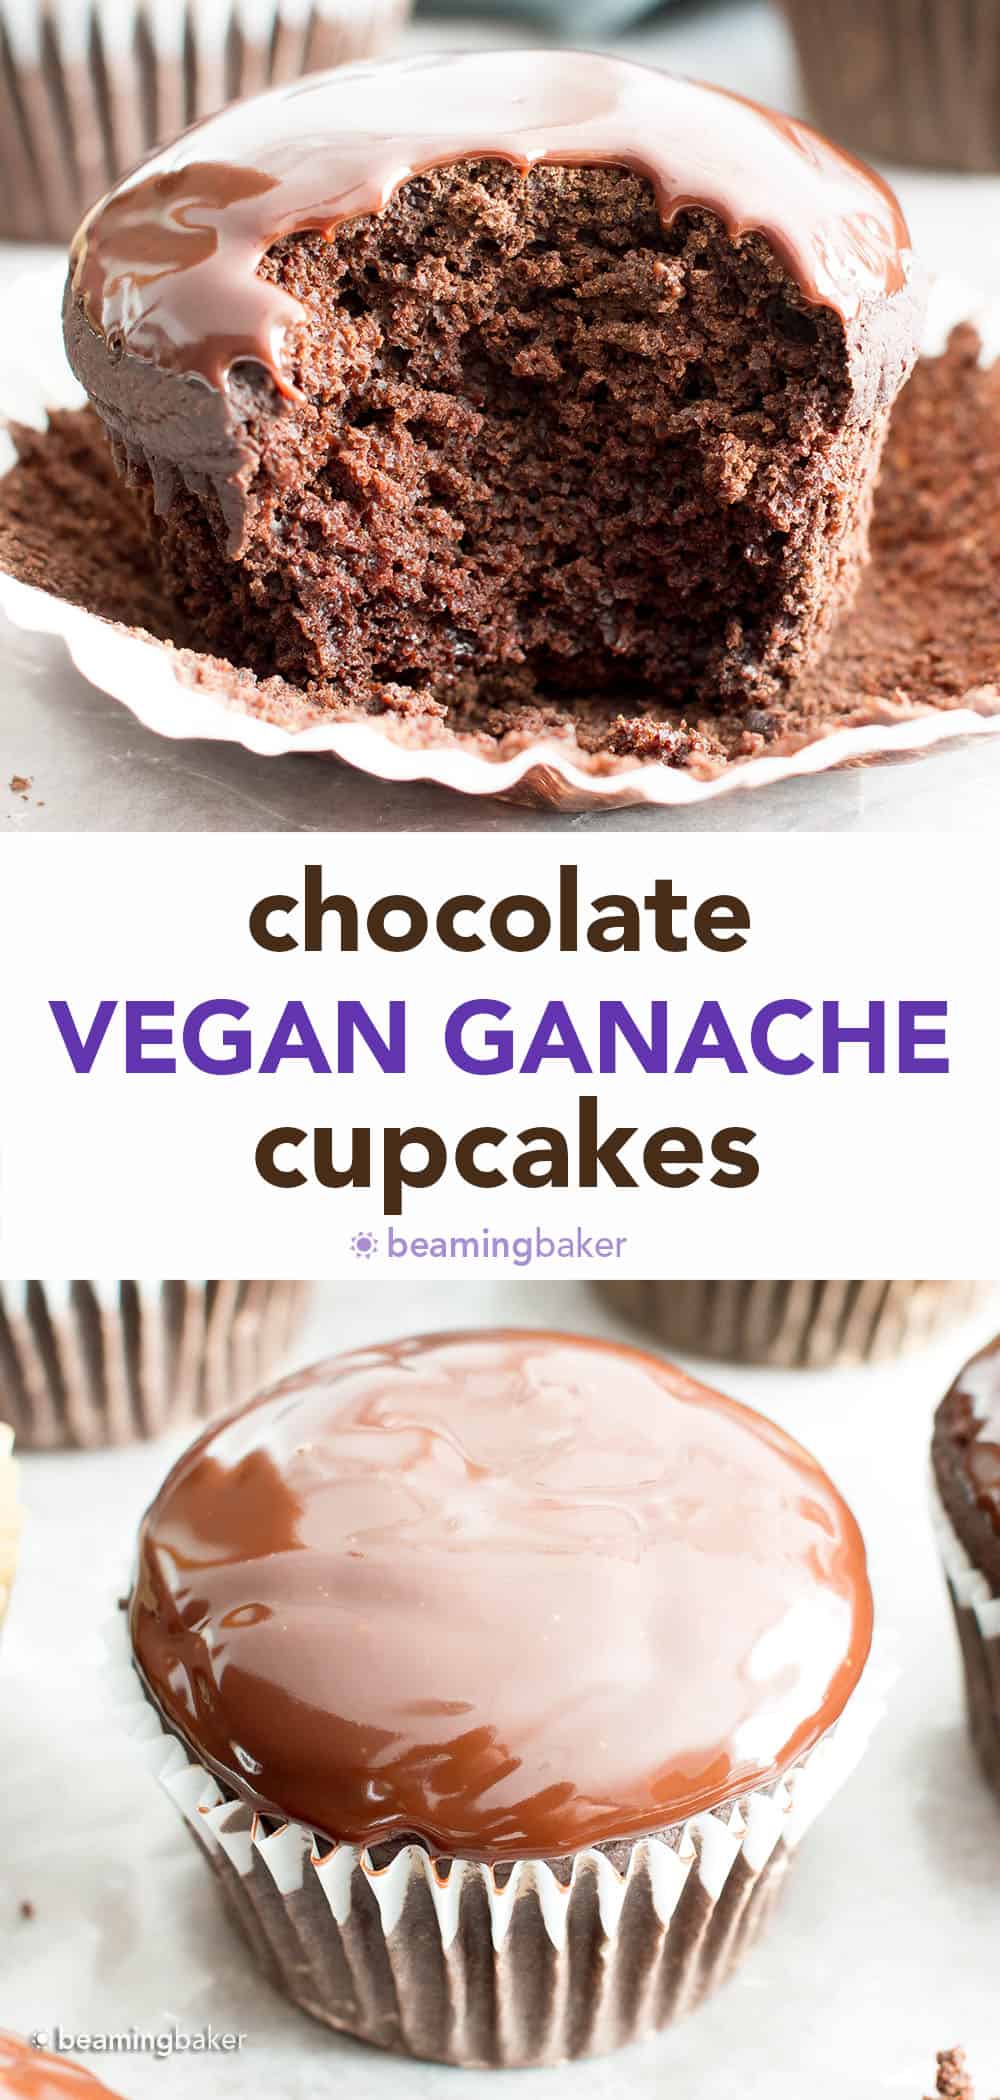 Vegan Chocolate Ganache Cupcakes: rich vegan chocolate cupcakes topped with sweet chocolate ganache. Your soon-to-be favorite chocolate ganache cupcakes! #Vegan #Cupcakes #Ganache #Chocolate | Recipe at BeamingBaker.com